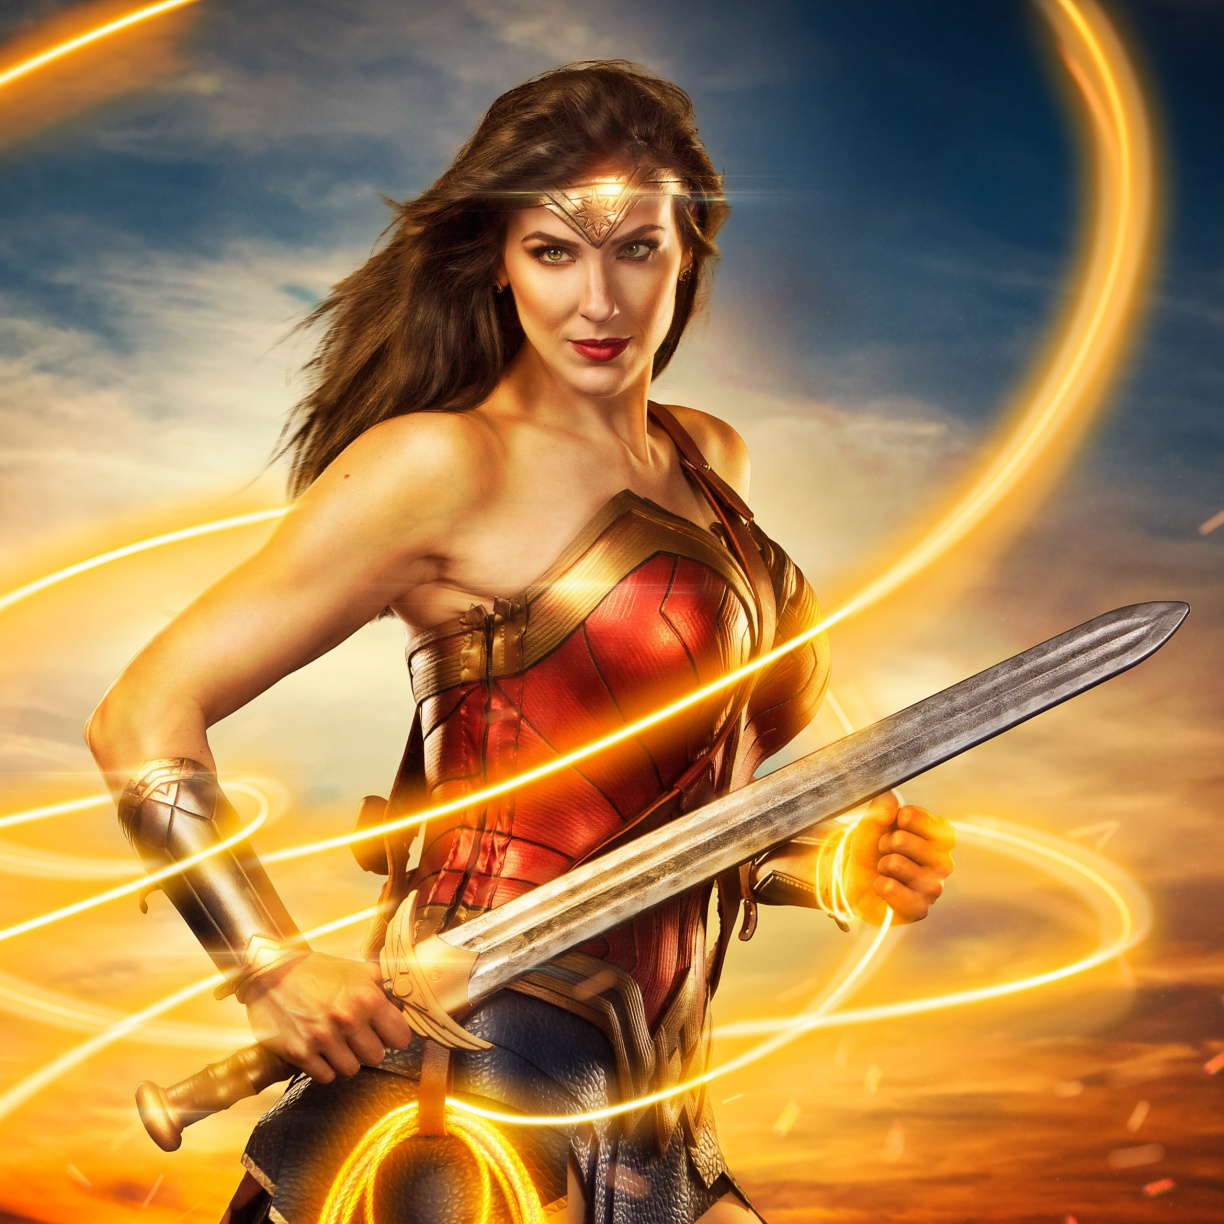 Woman Model, Cosplay, Wonder Woman, Wallpaper - Cool Wonder Woman - HD Wallpaper 